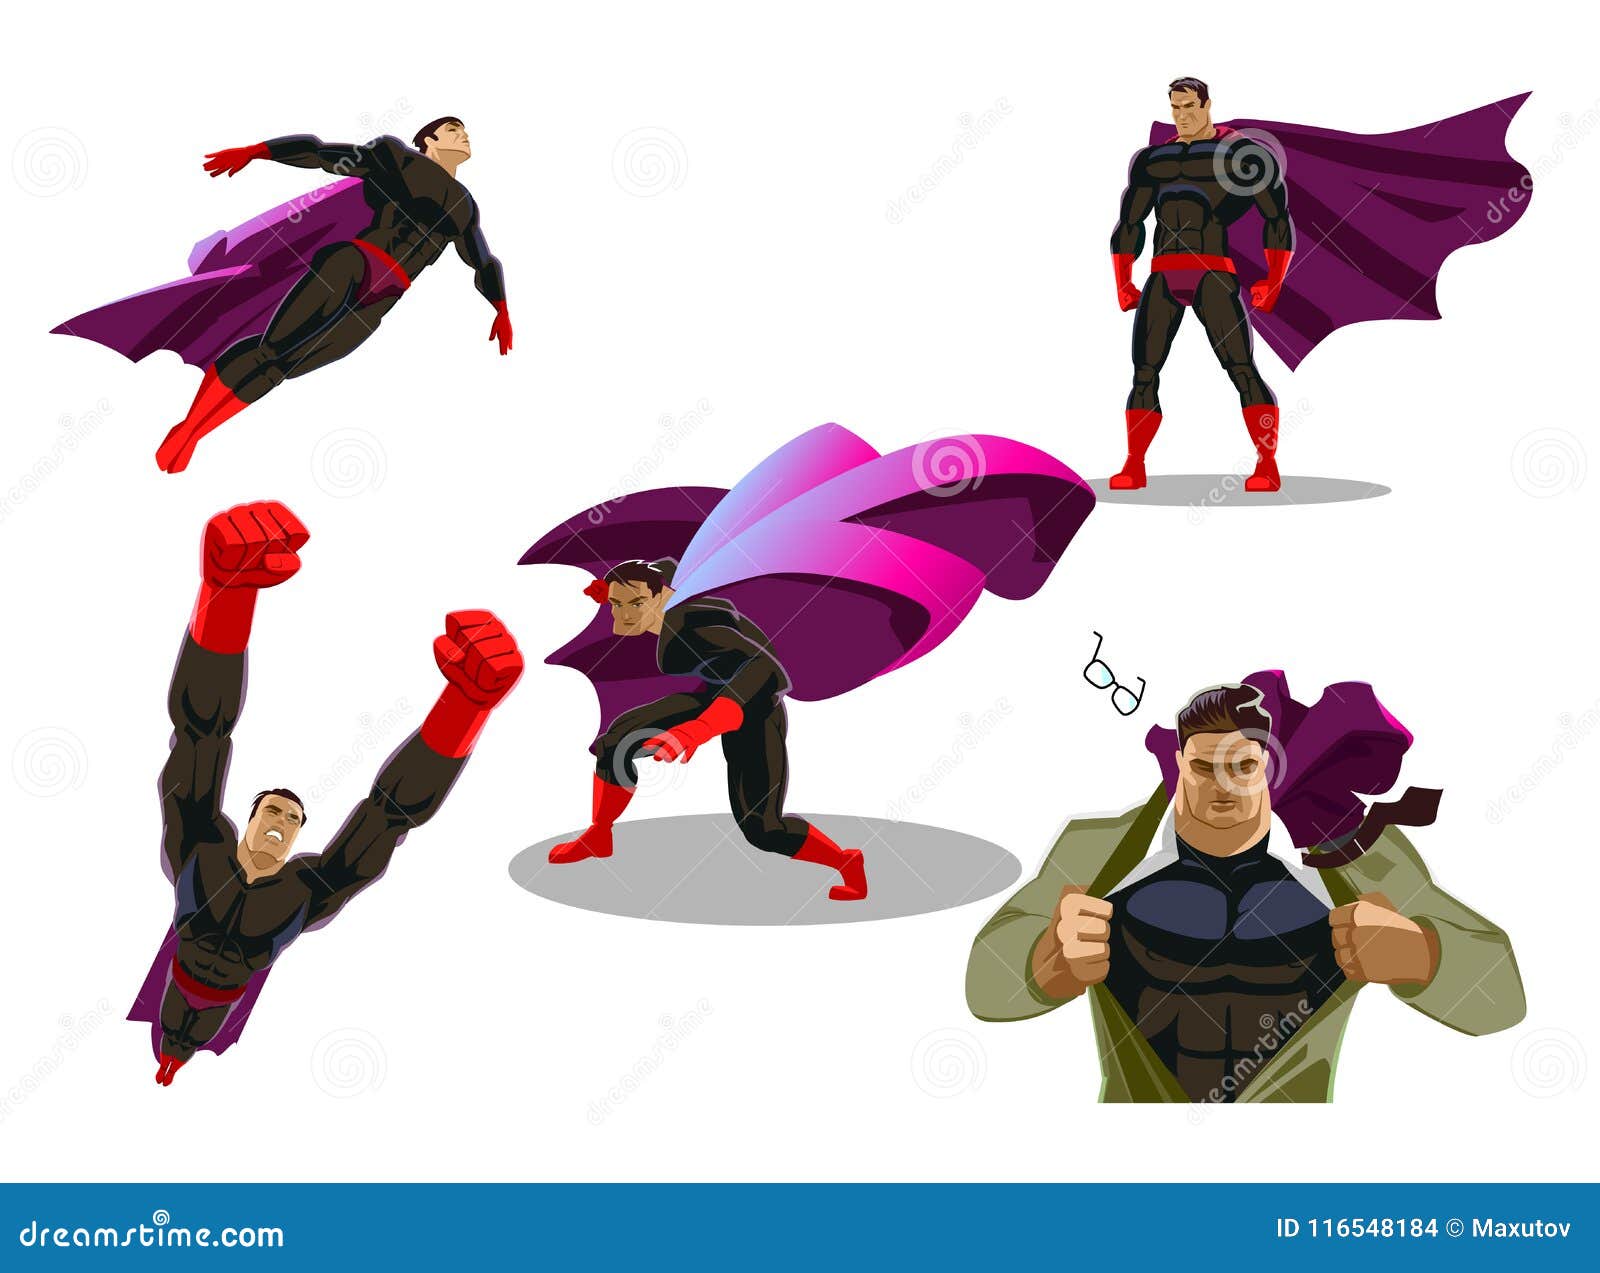 Superhero Poses for Genesis 8 Male | Superhero, Poses, Fighting poses